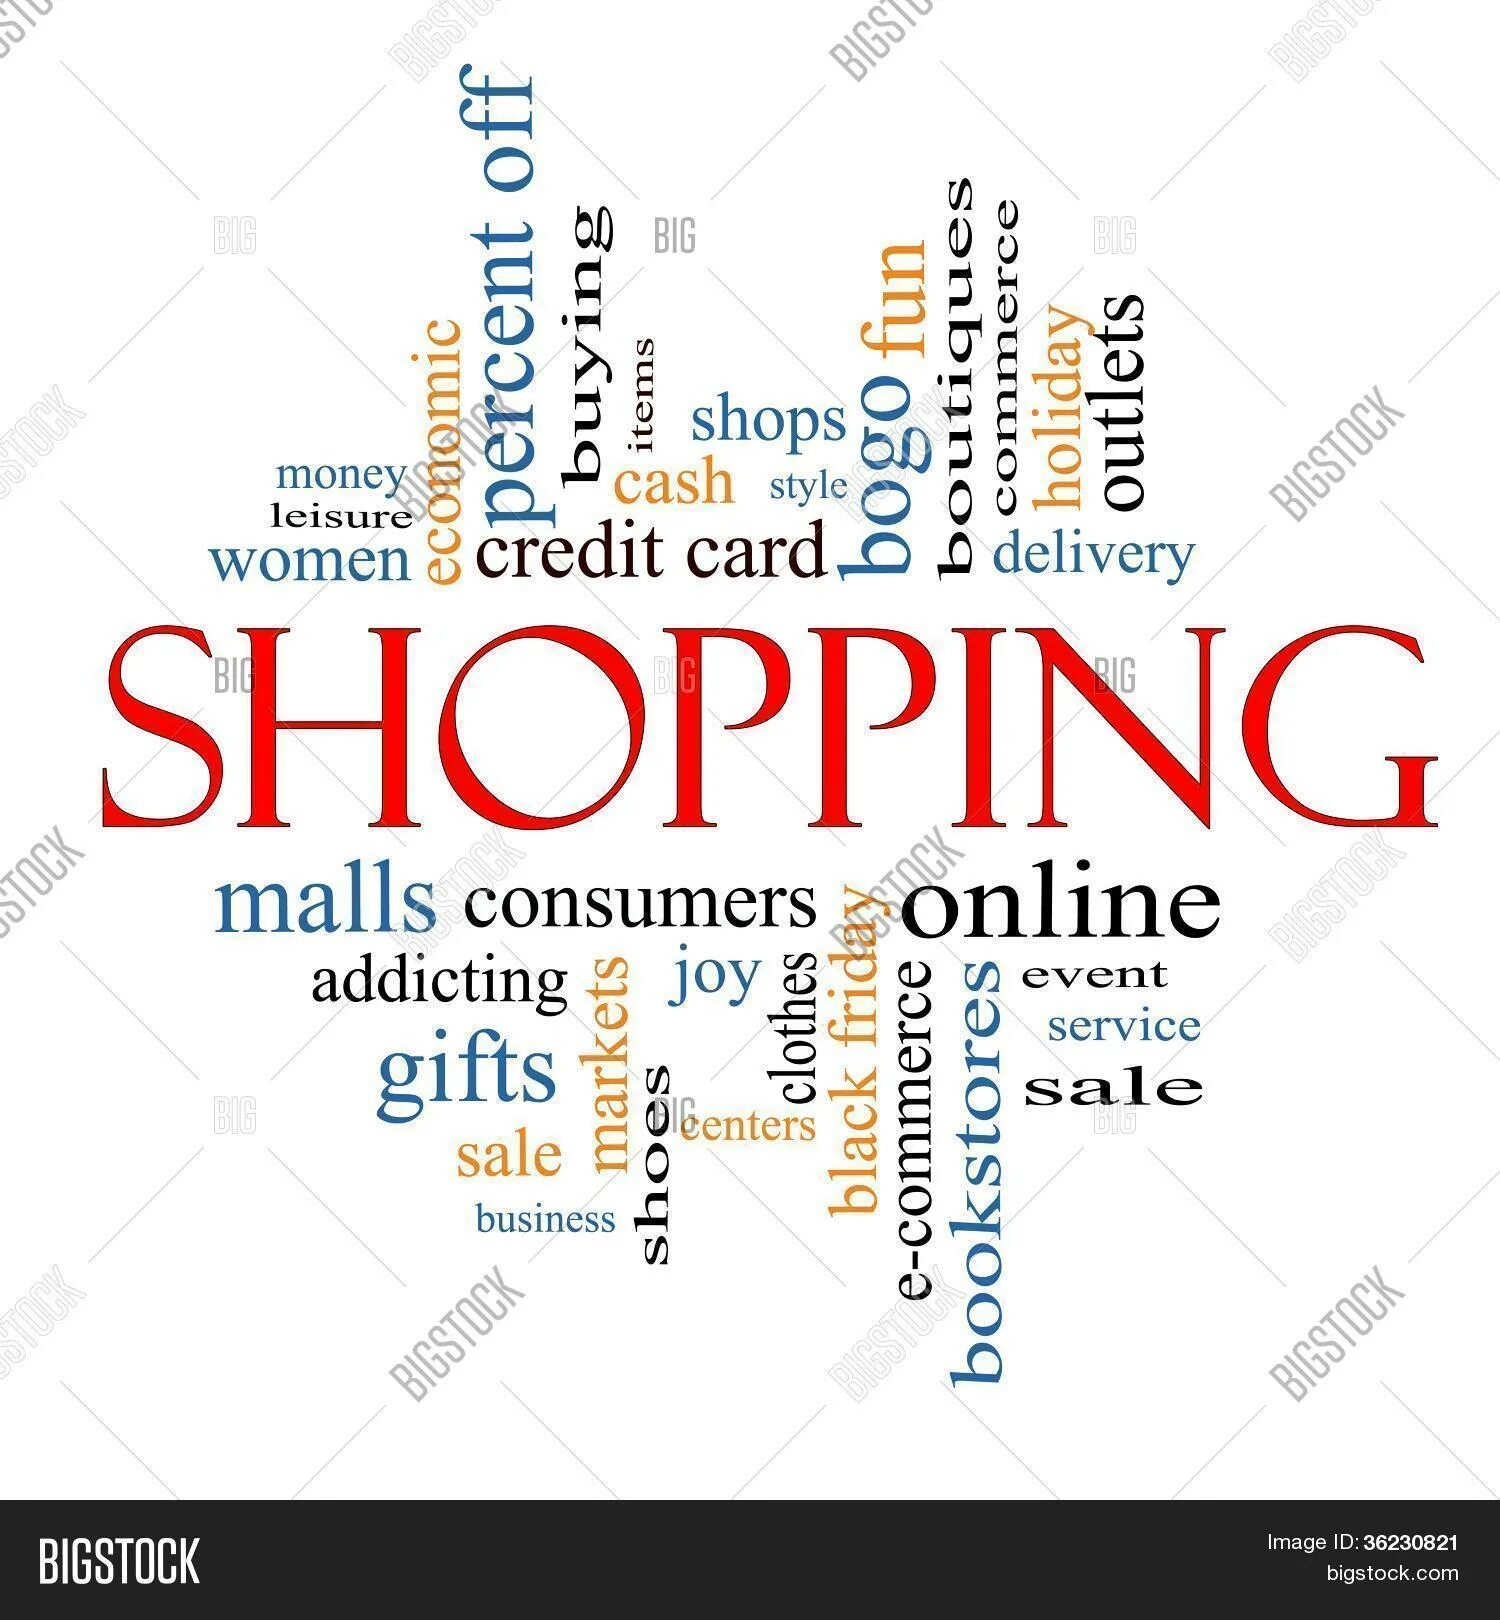 Слово shop. Shopping слово. Shopping Words. Картинка соово шопинг. Shop and shopping слова